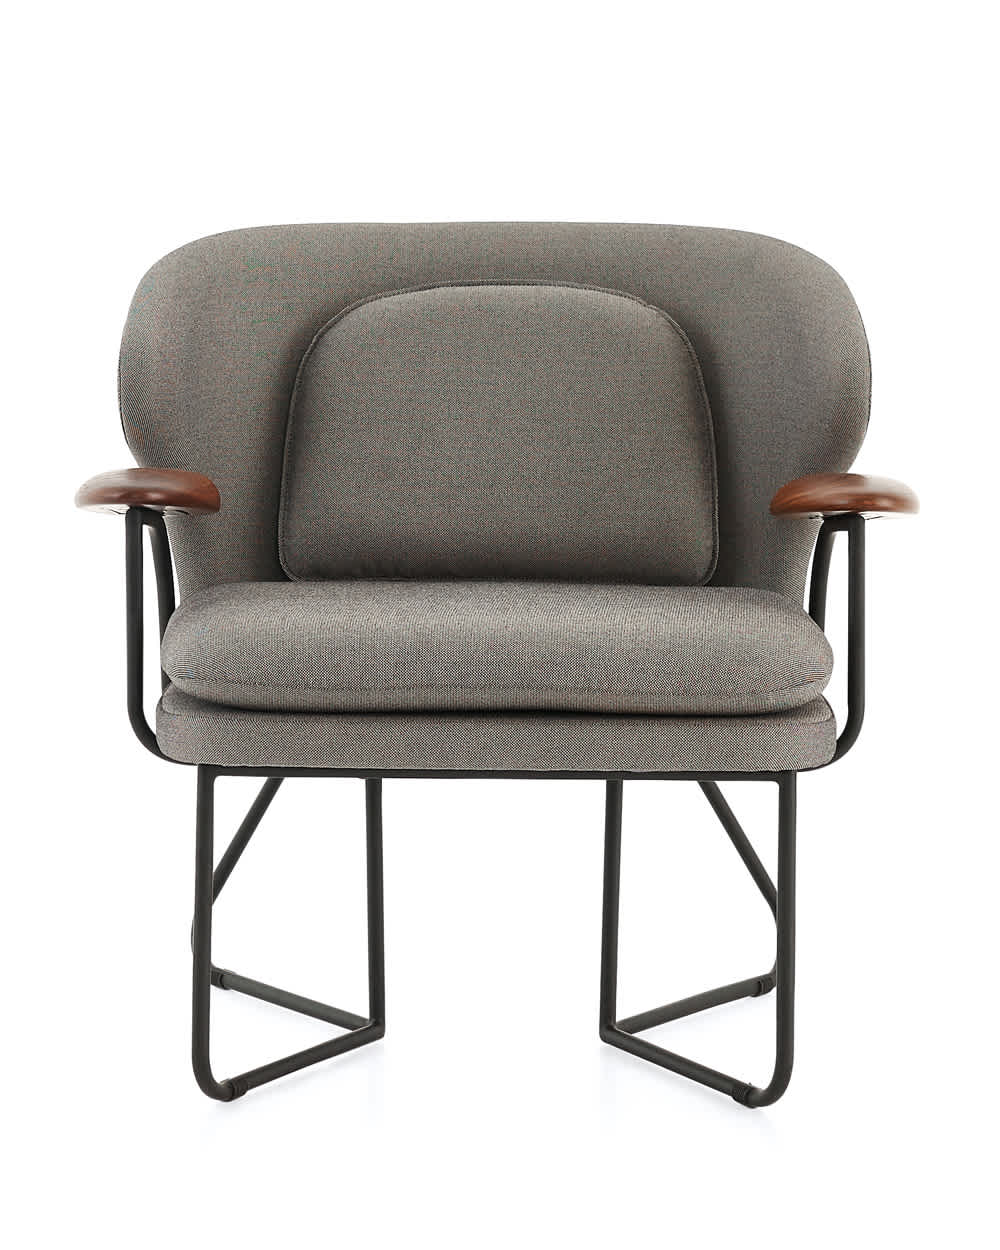 Chillax Lounge Chair | Products | ステラワークスジャパン